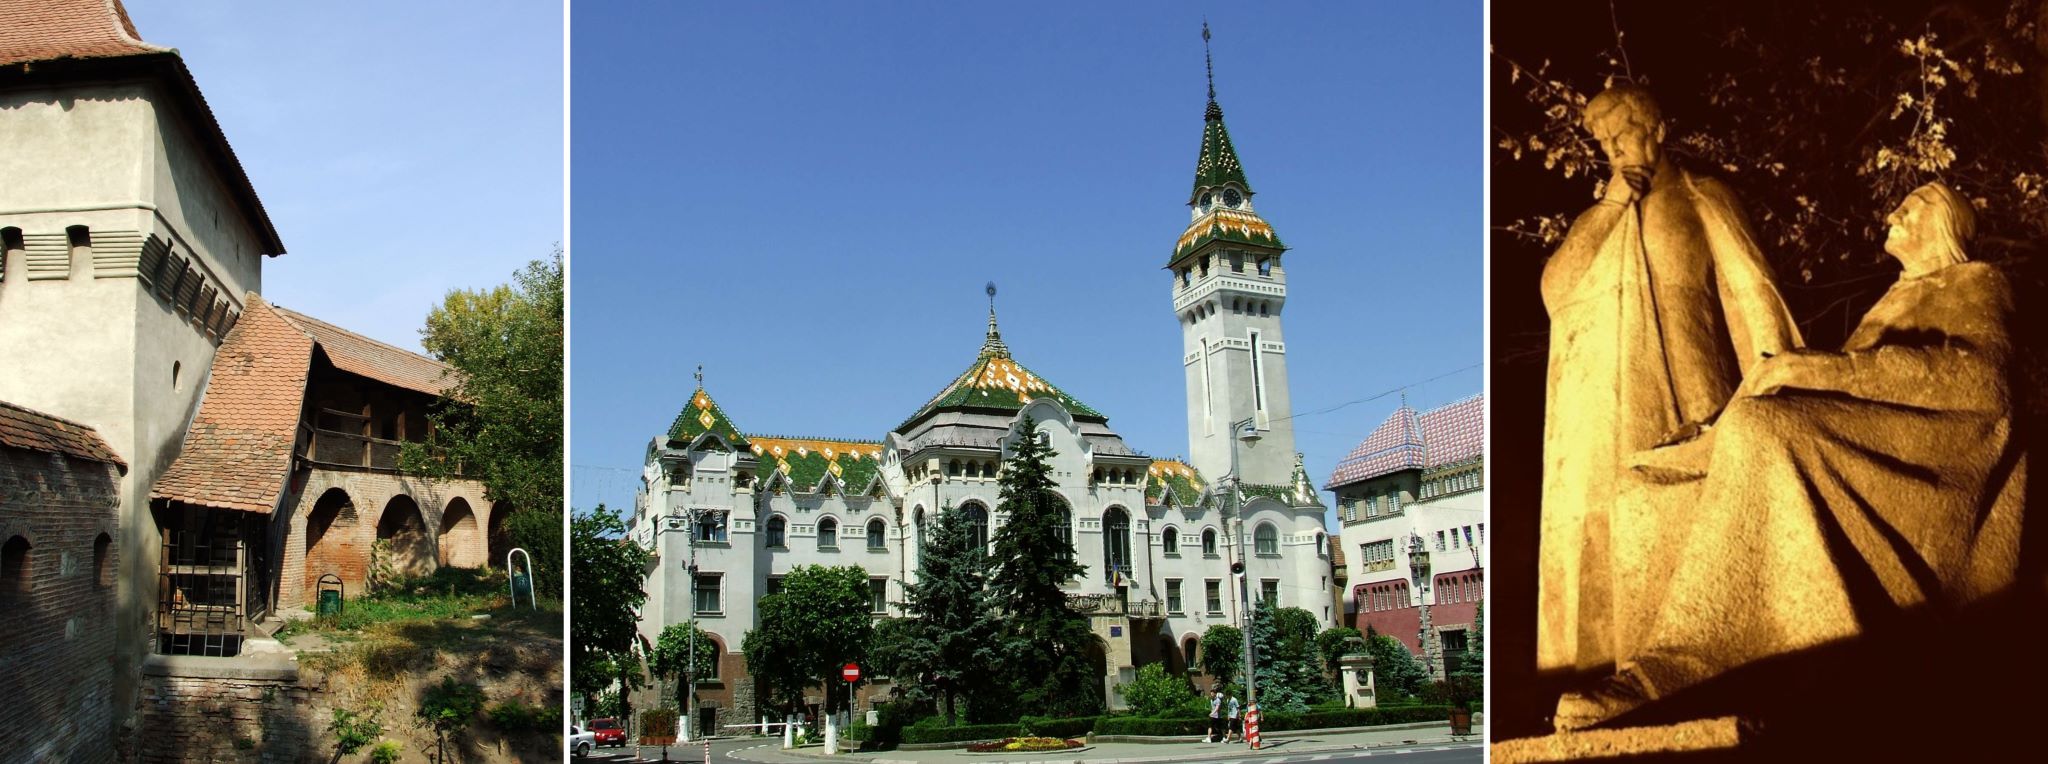 Hungarian Part-Financed Luxury Hotel in Romania Opens Its Doors